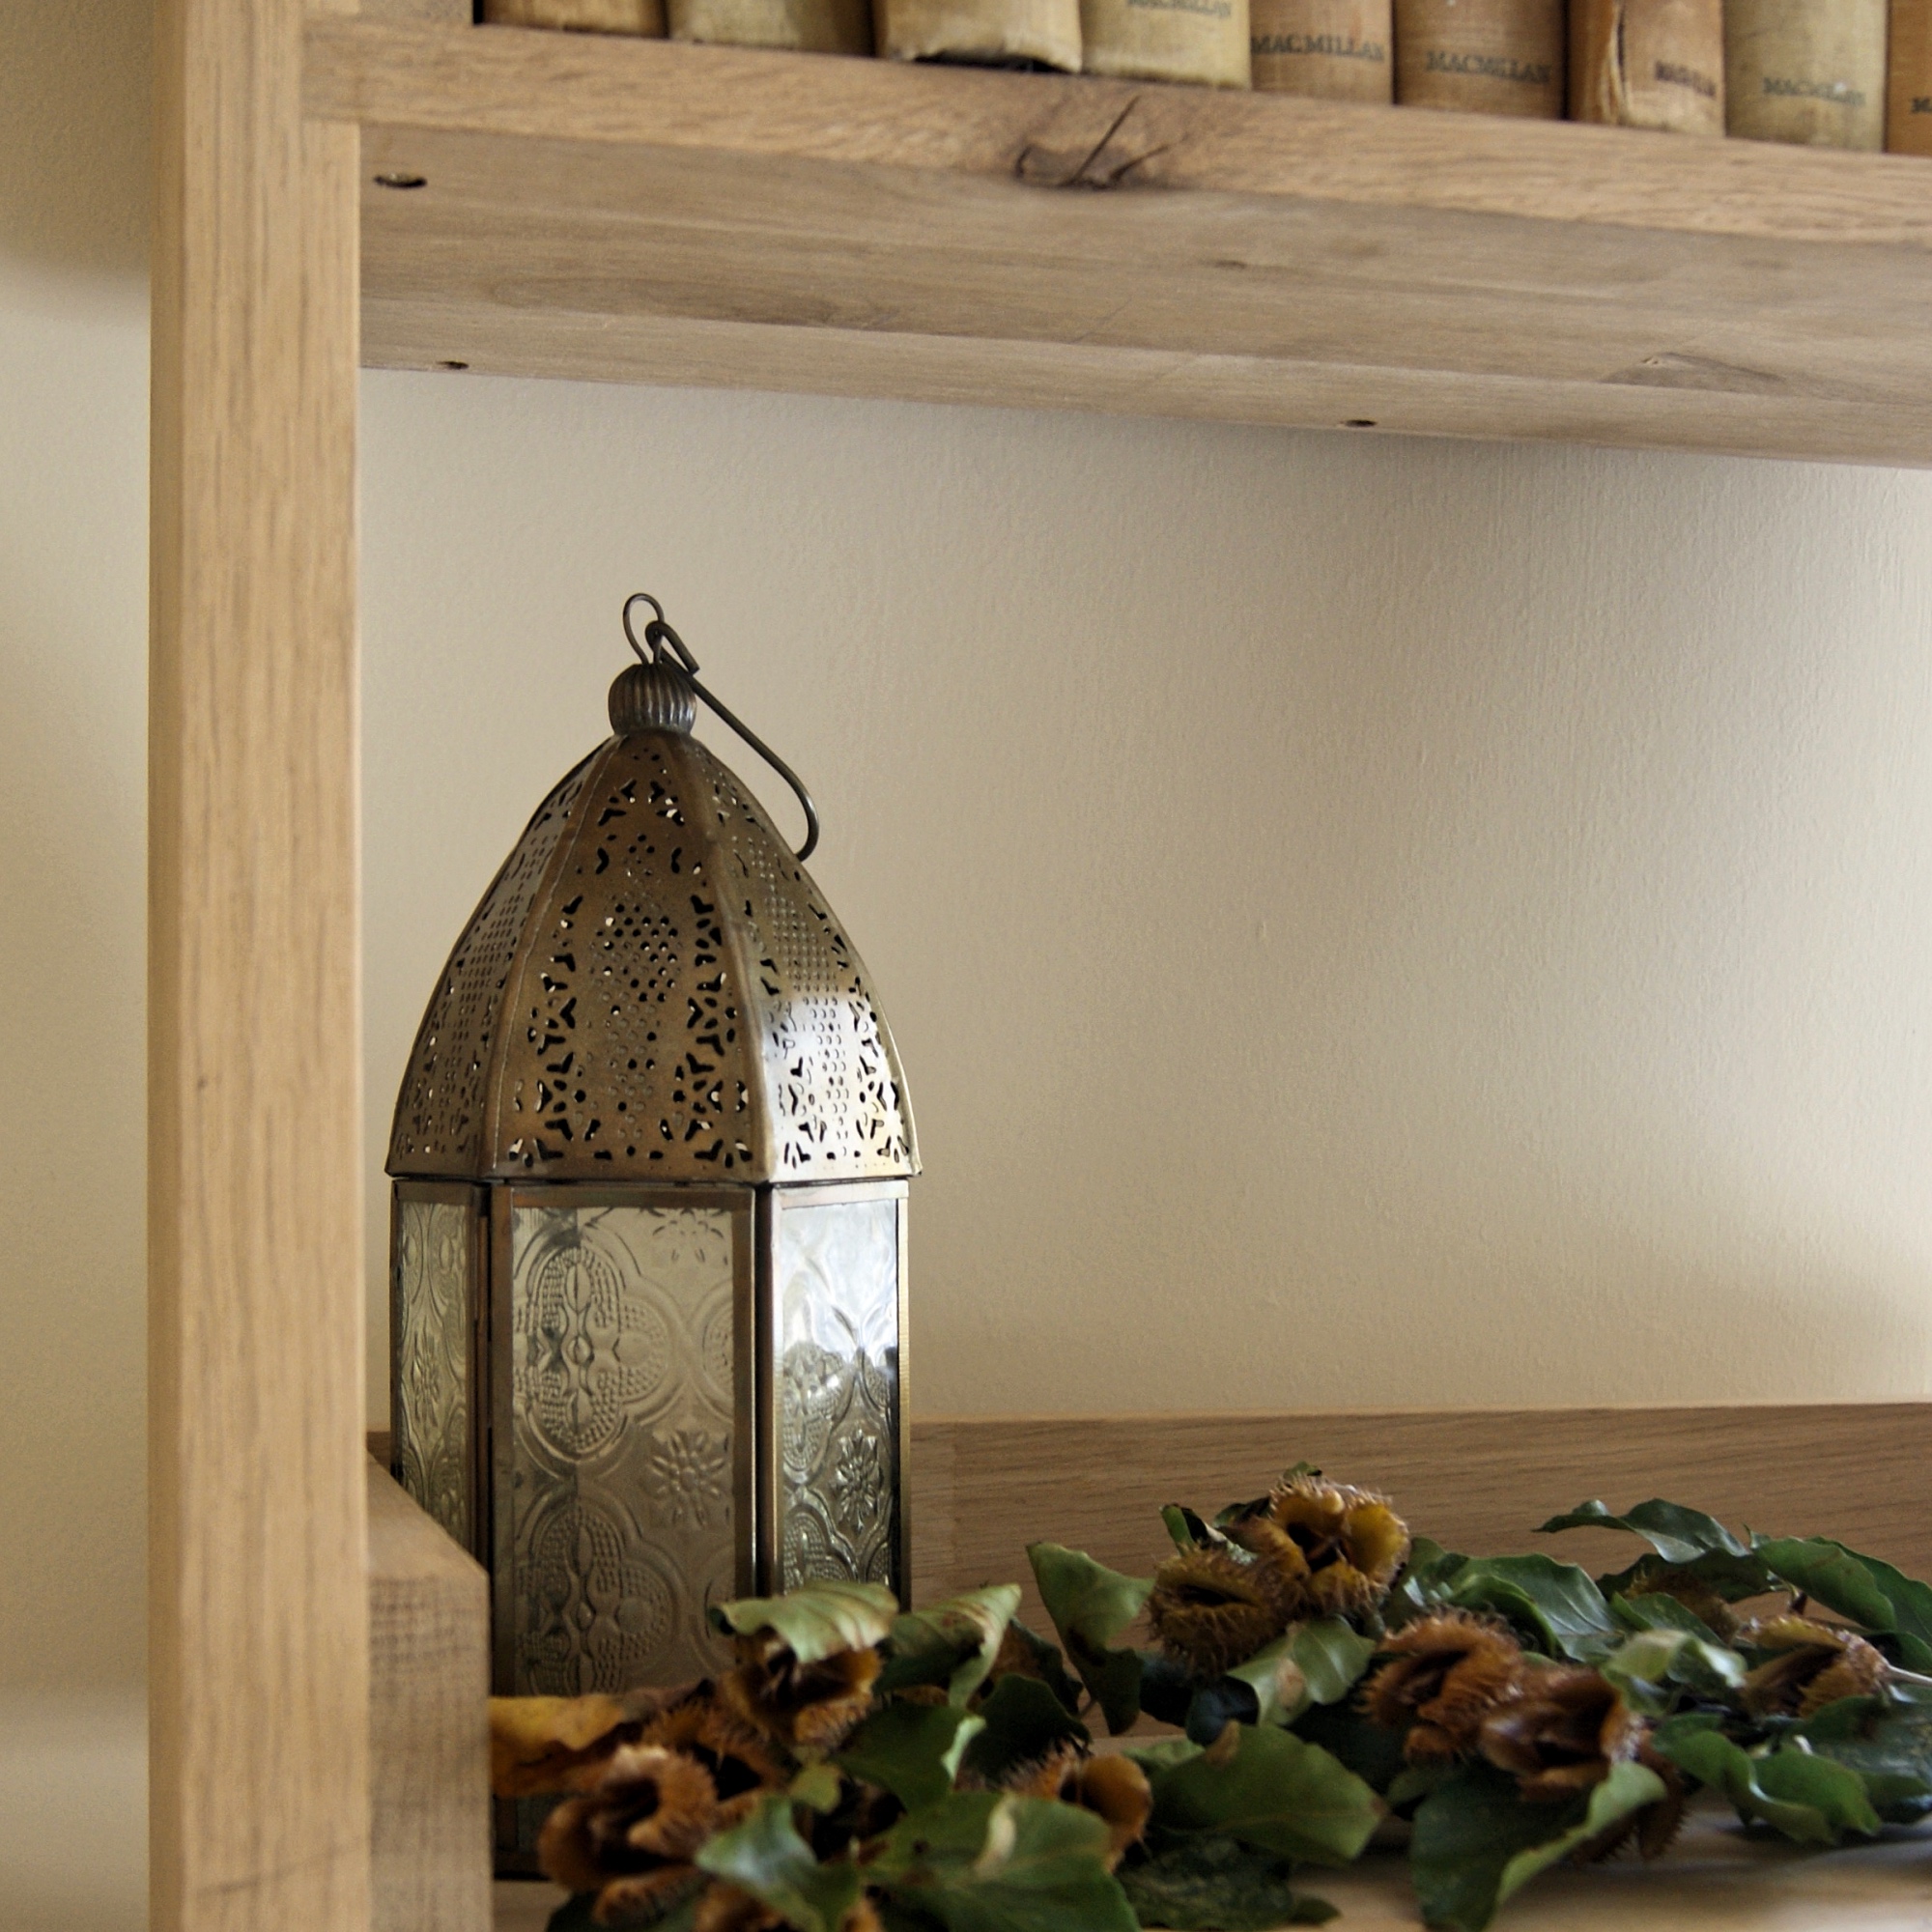 Lantern on book shelf - home fo juniper - home decor.jpg